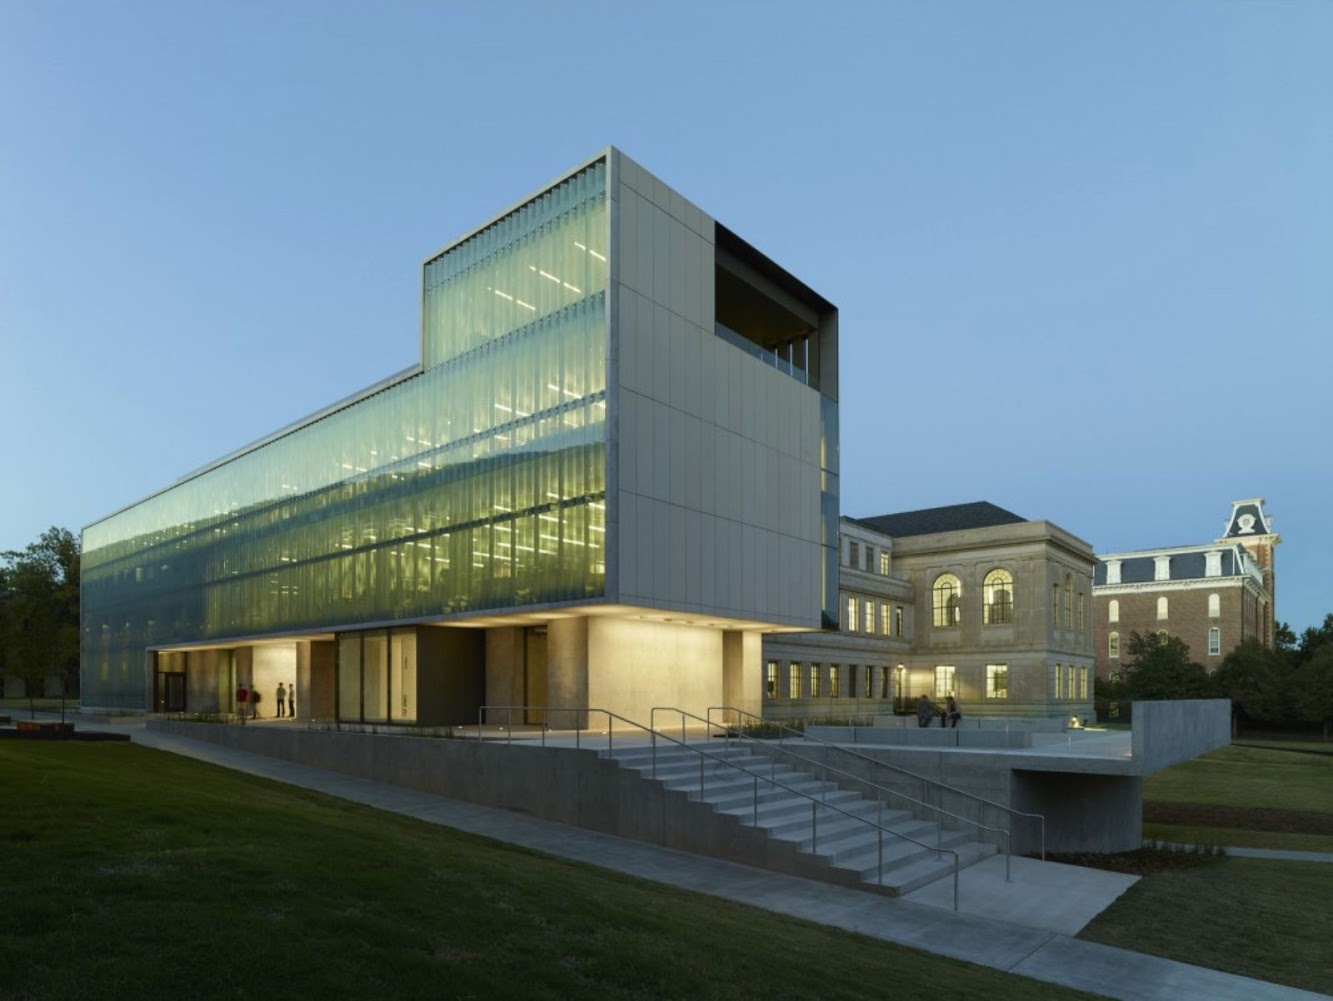 Steven L Anderson Design Center by Marlon Blackwell